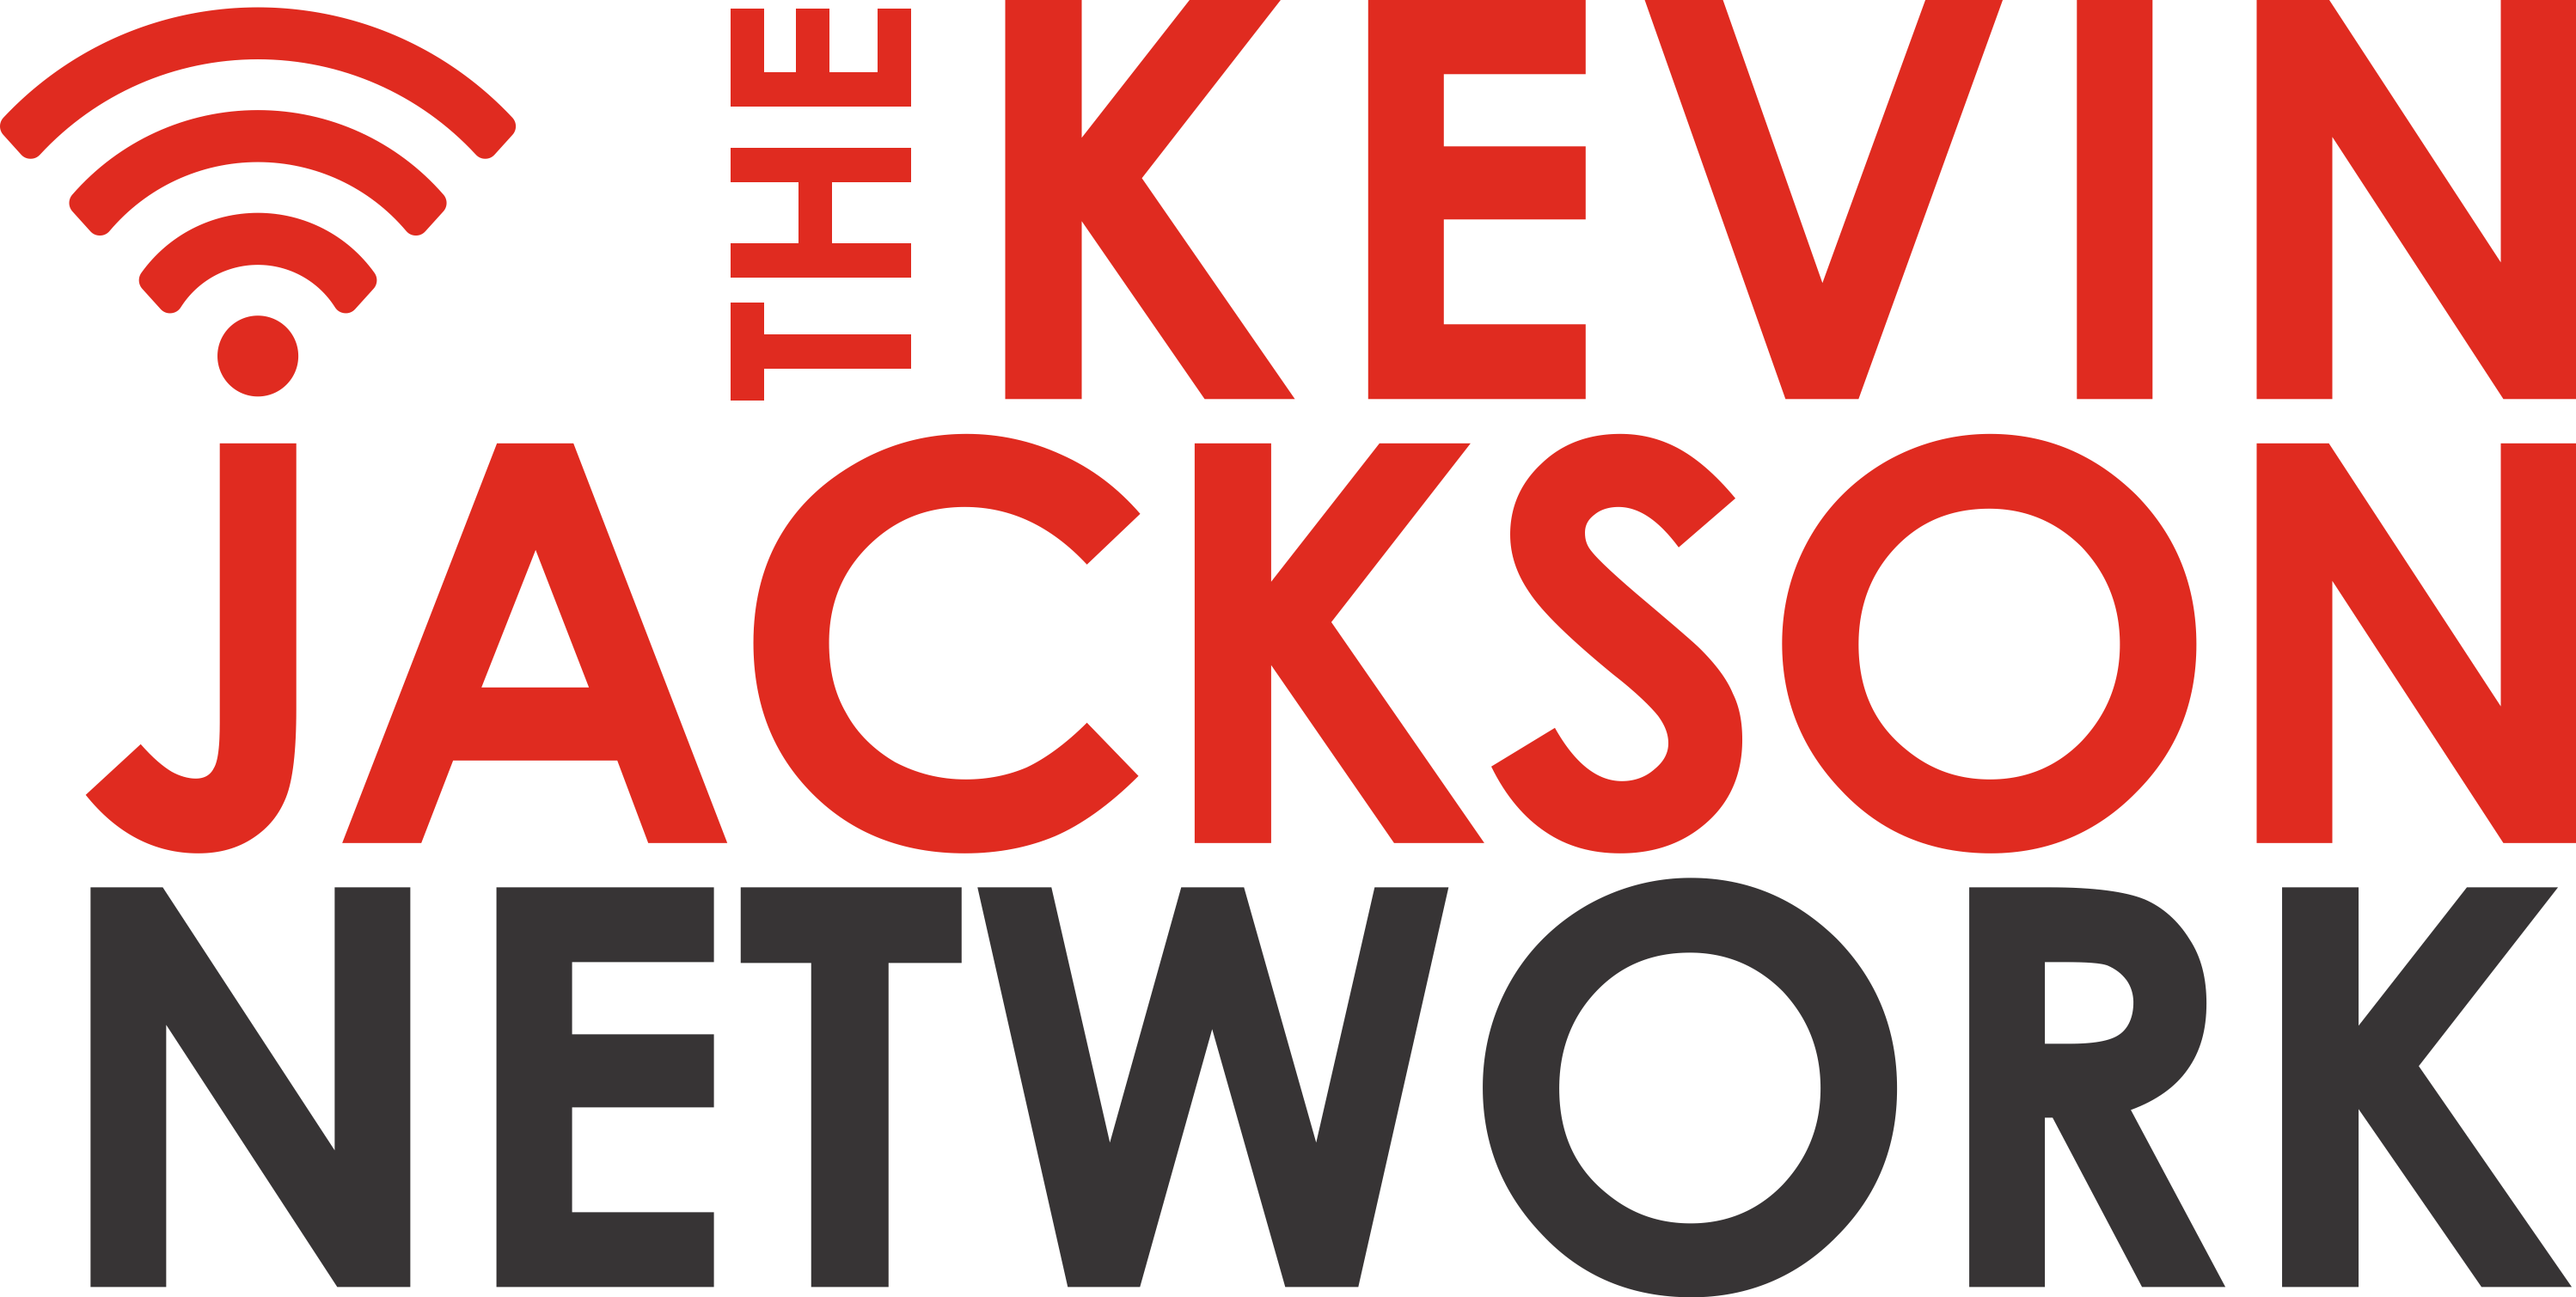 Kevin Jackson – International Speaker | Conservative Talk Show Host - The Kevin Jackson Network